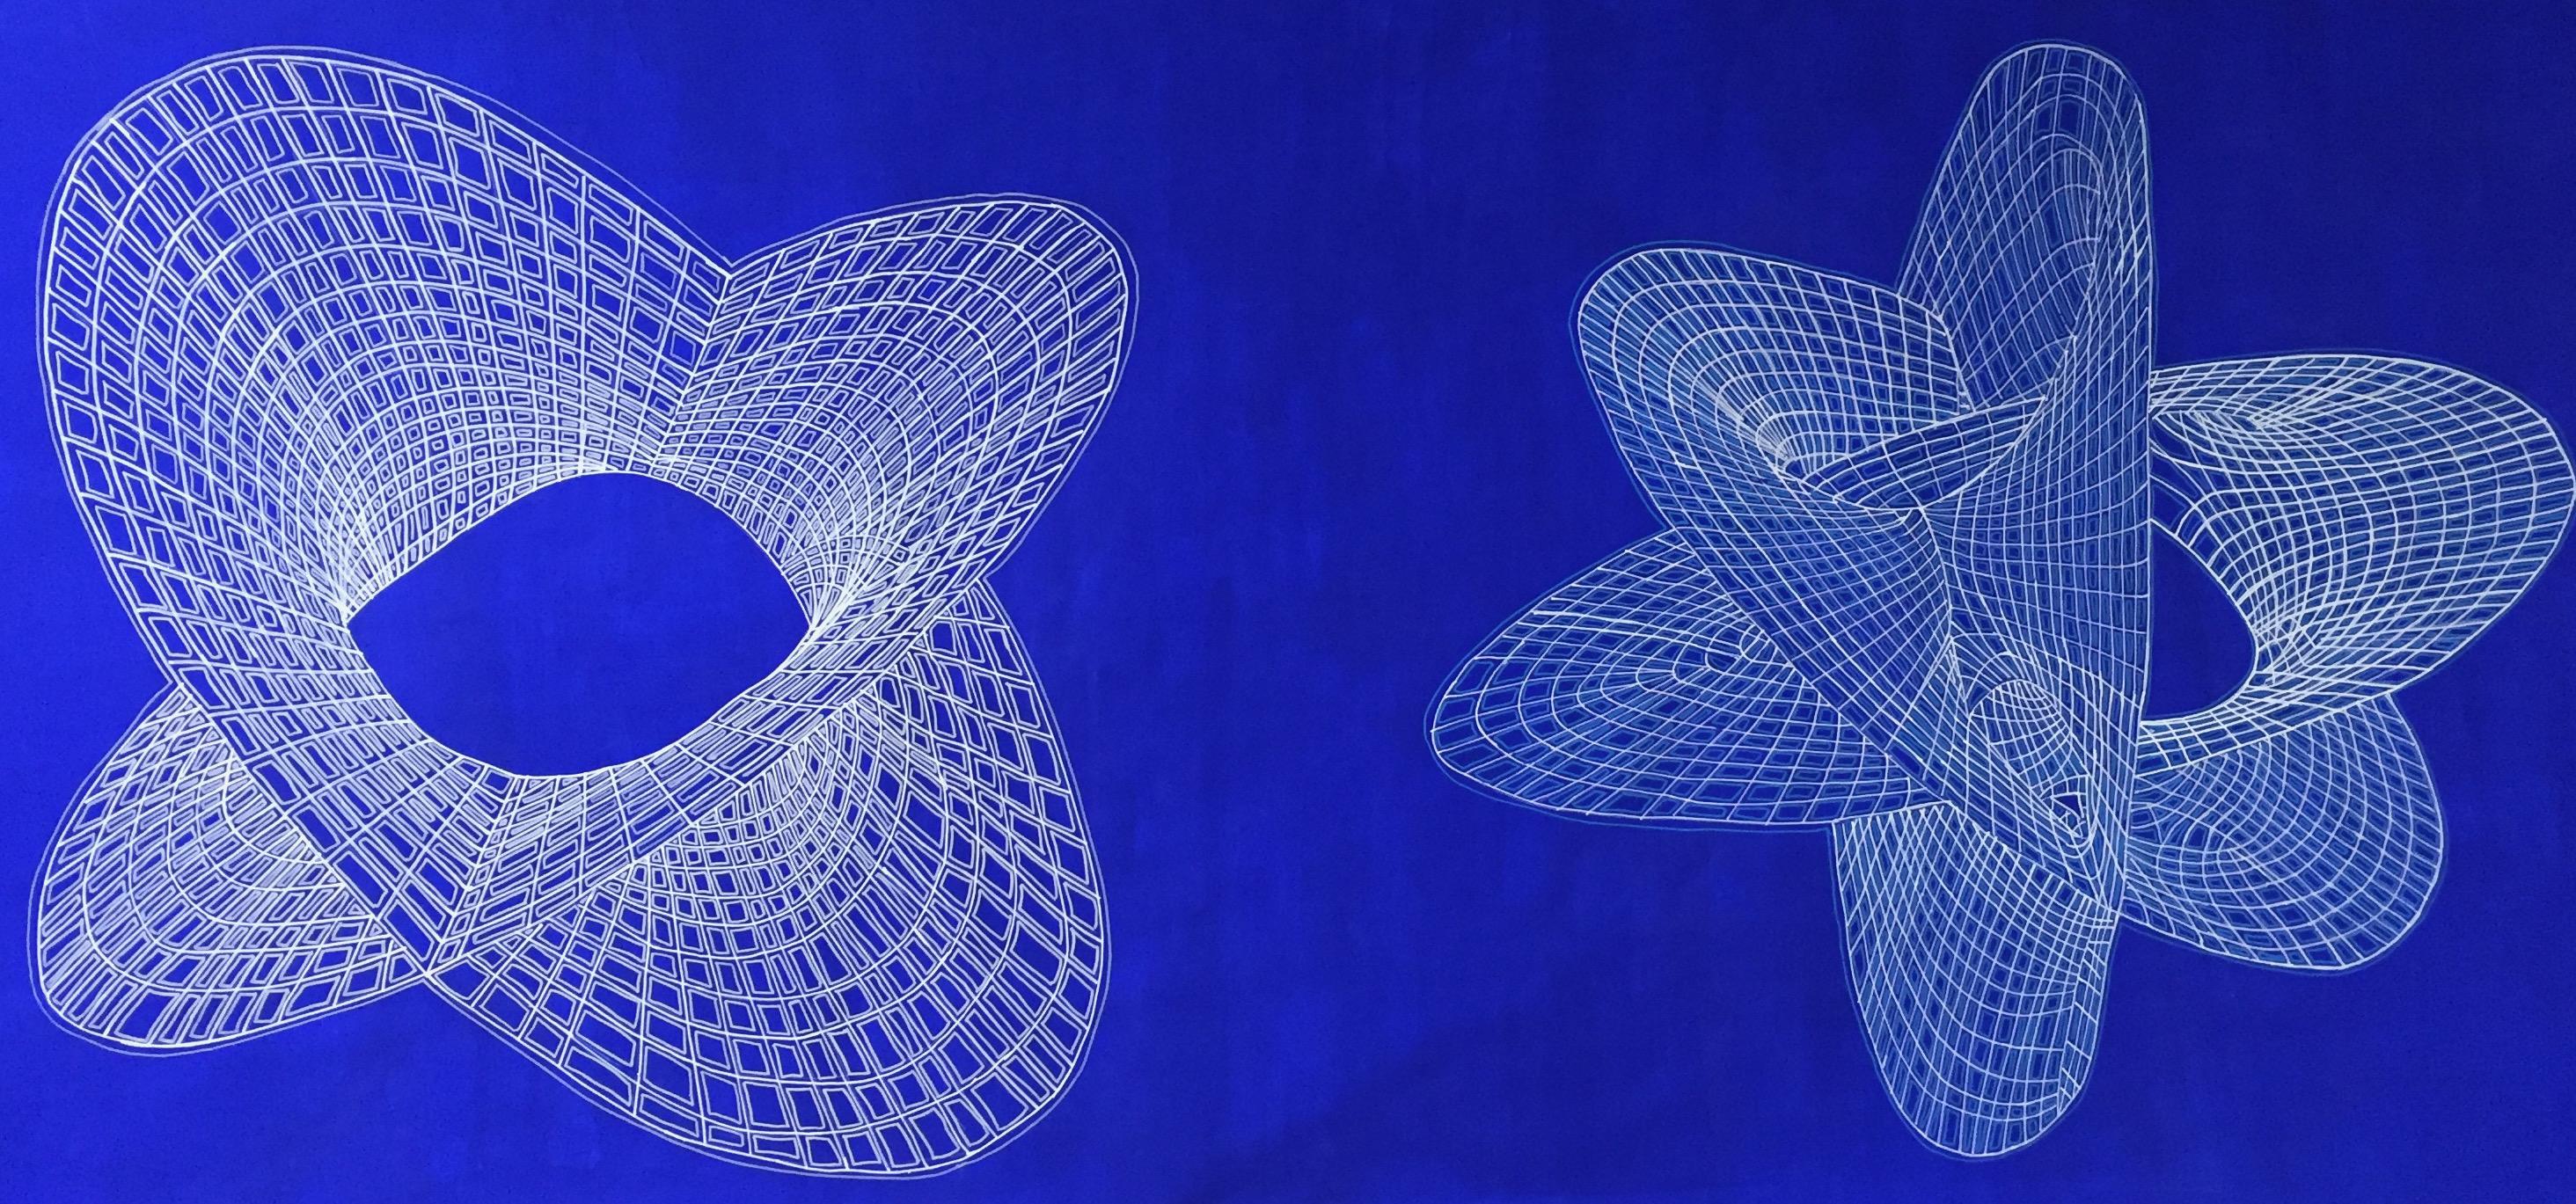 Jody Rasch Abstract Drawing - Dimensions 4 - Calabi-Yau Manifold